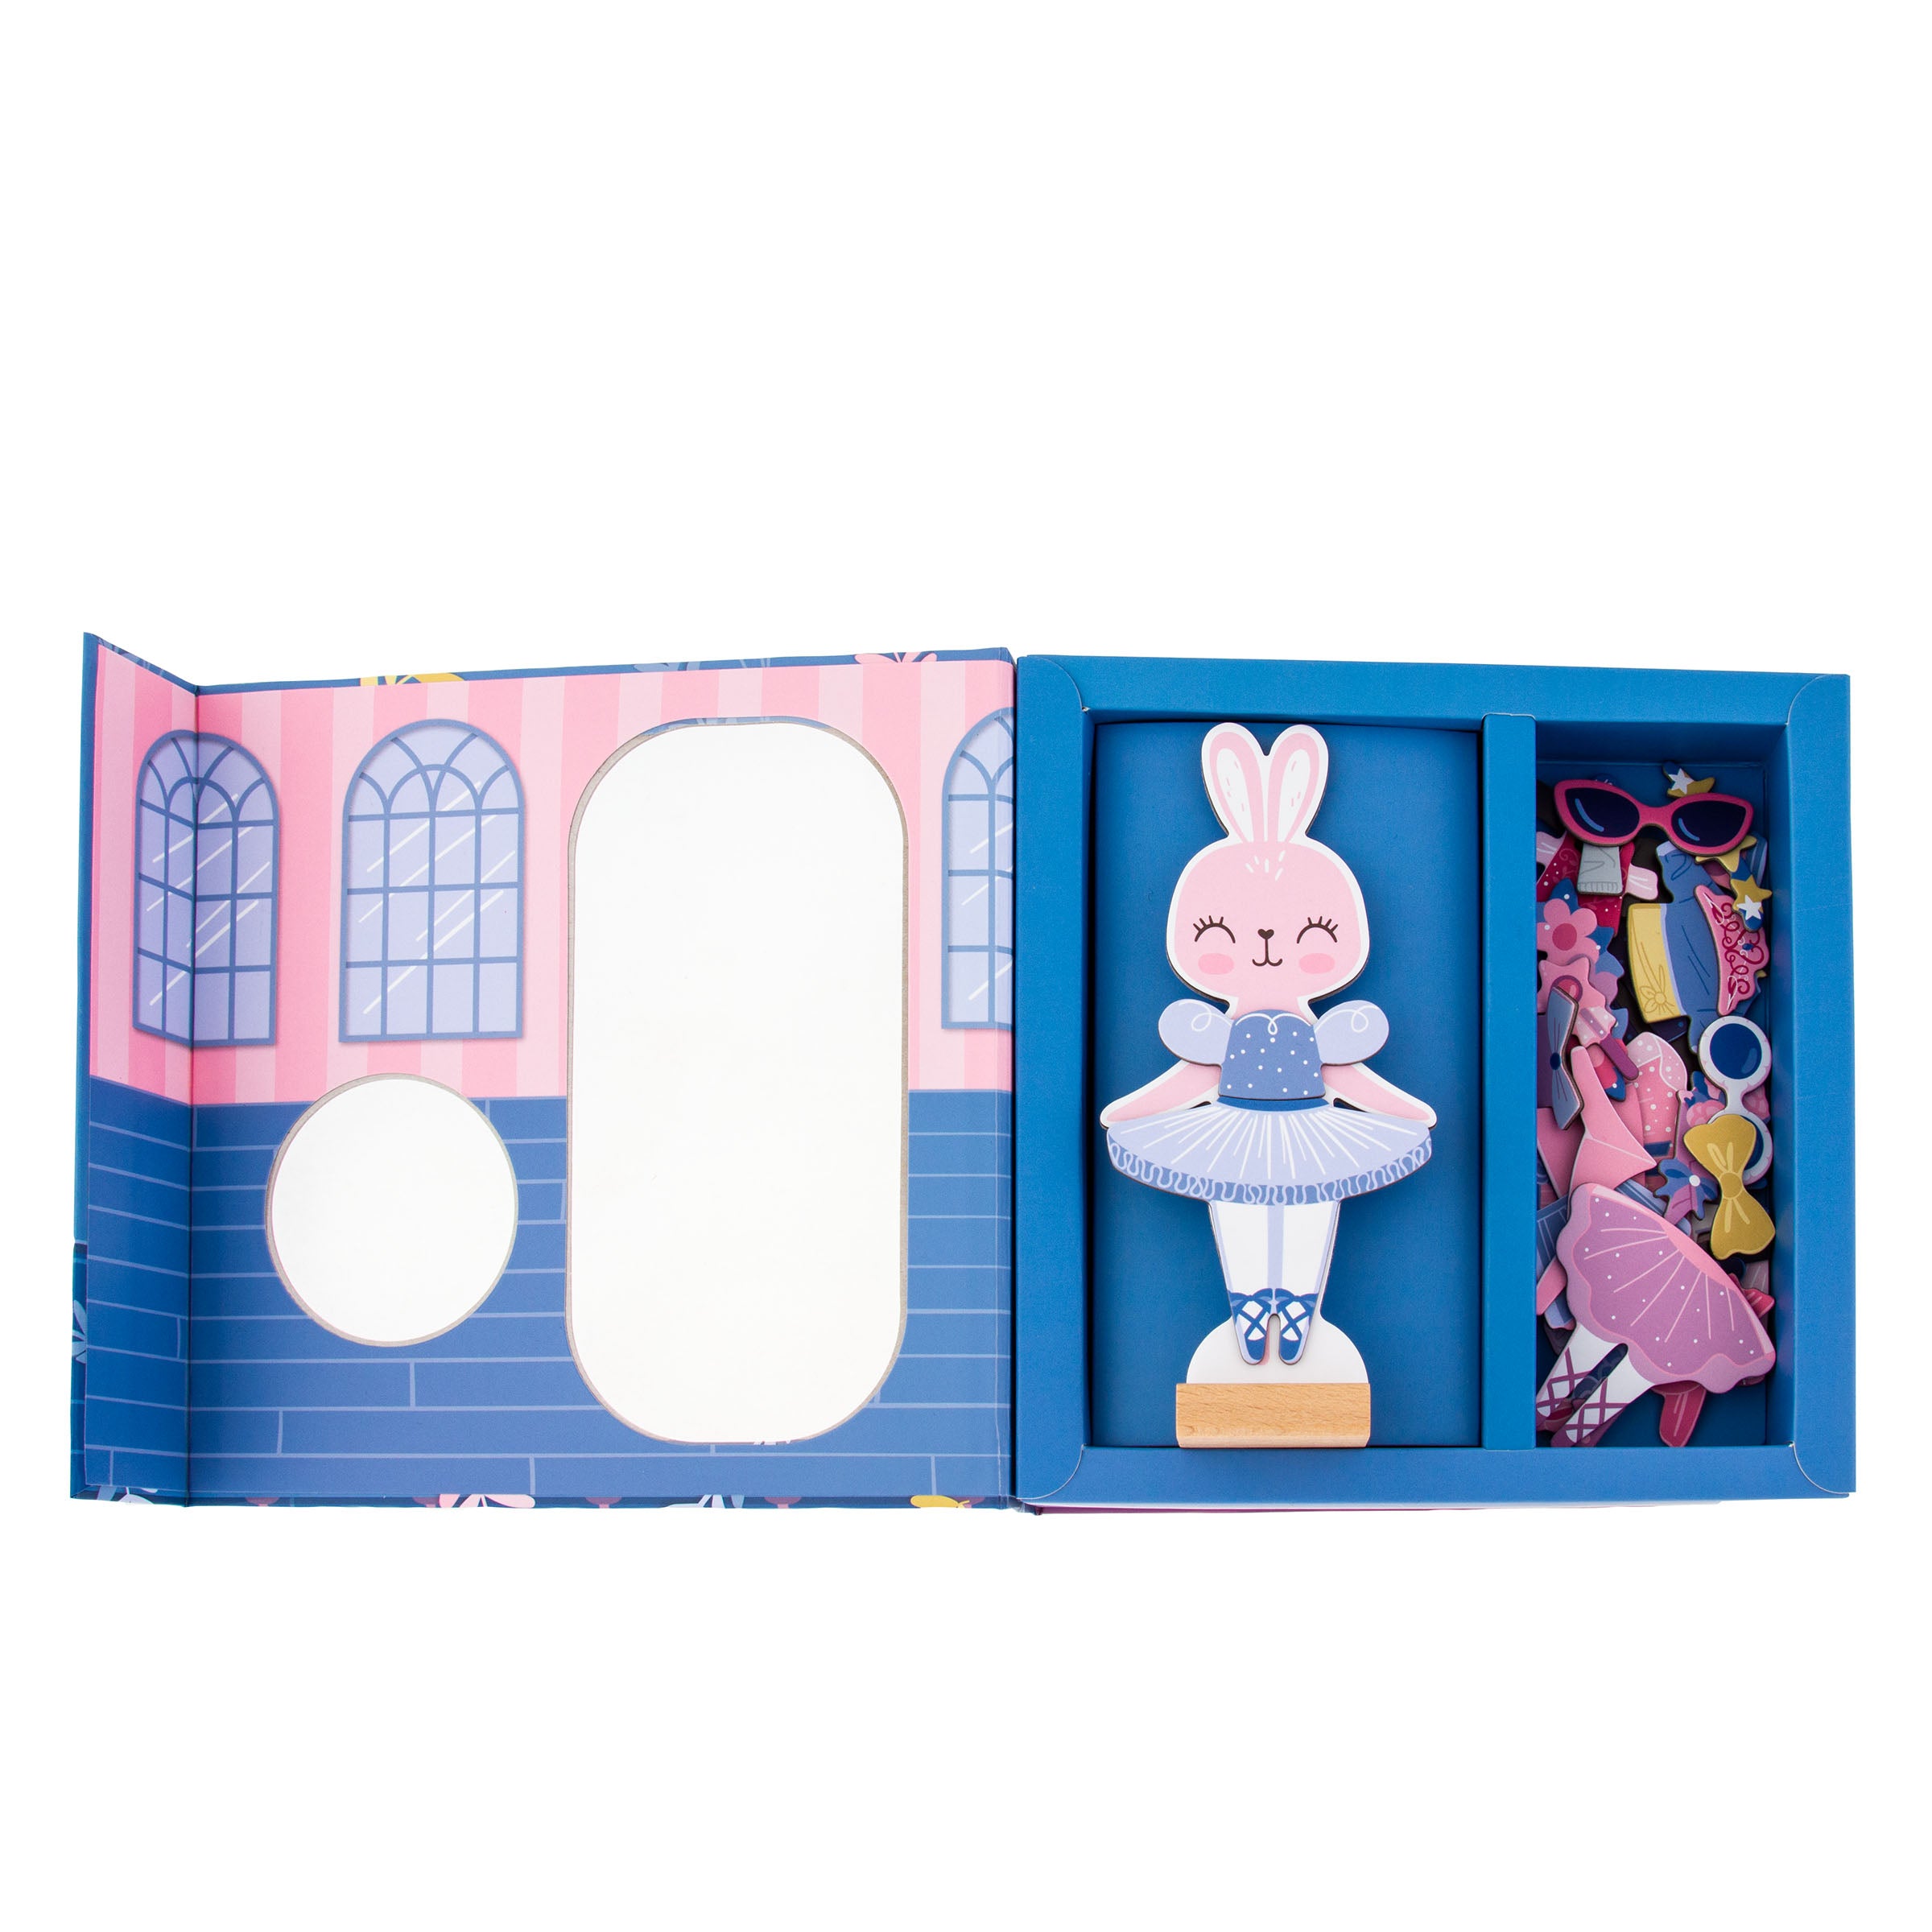 Stephen Joseph Magnetic Dress Up Box Set – Bunny & Mouse